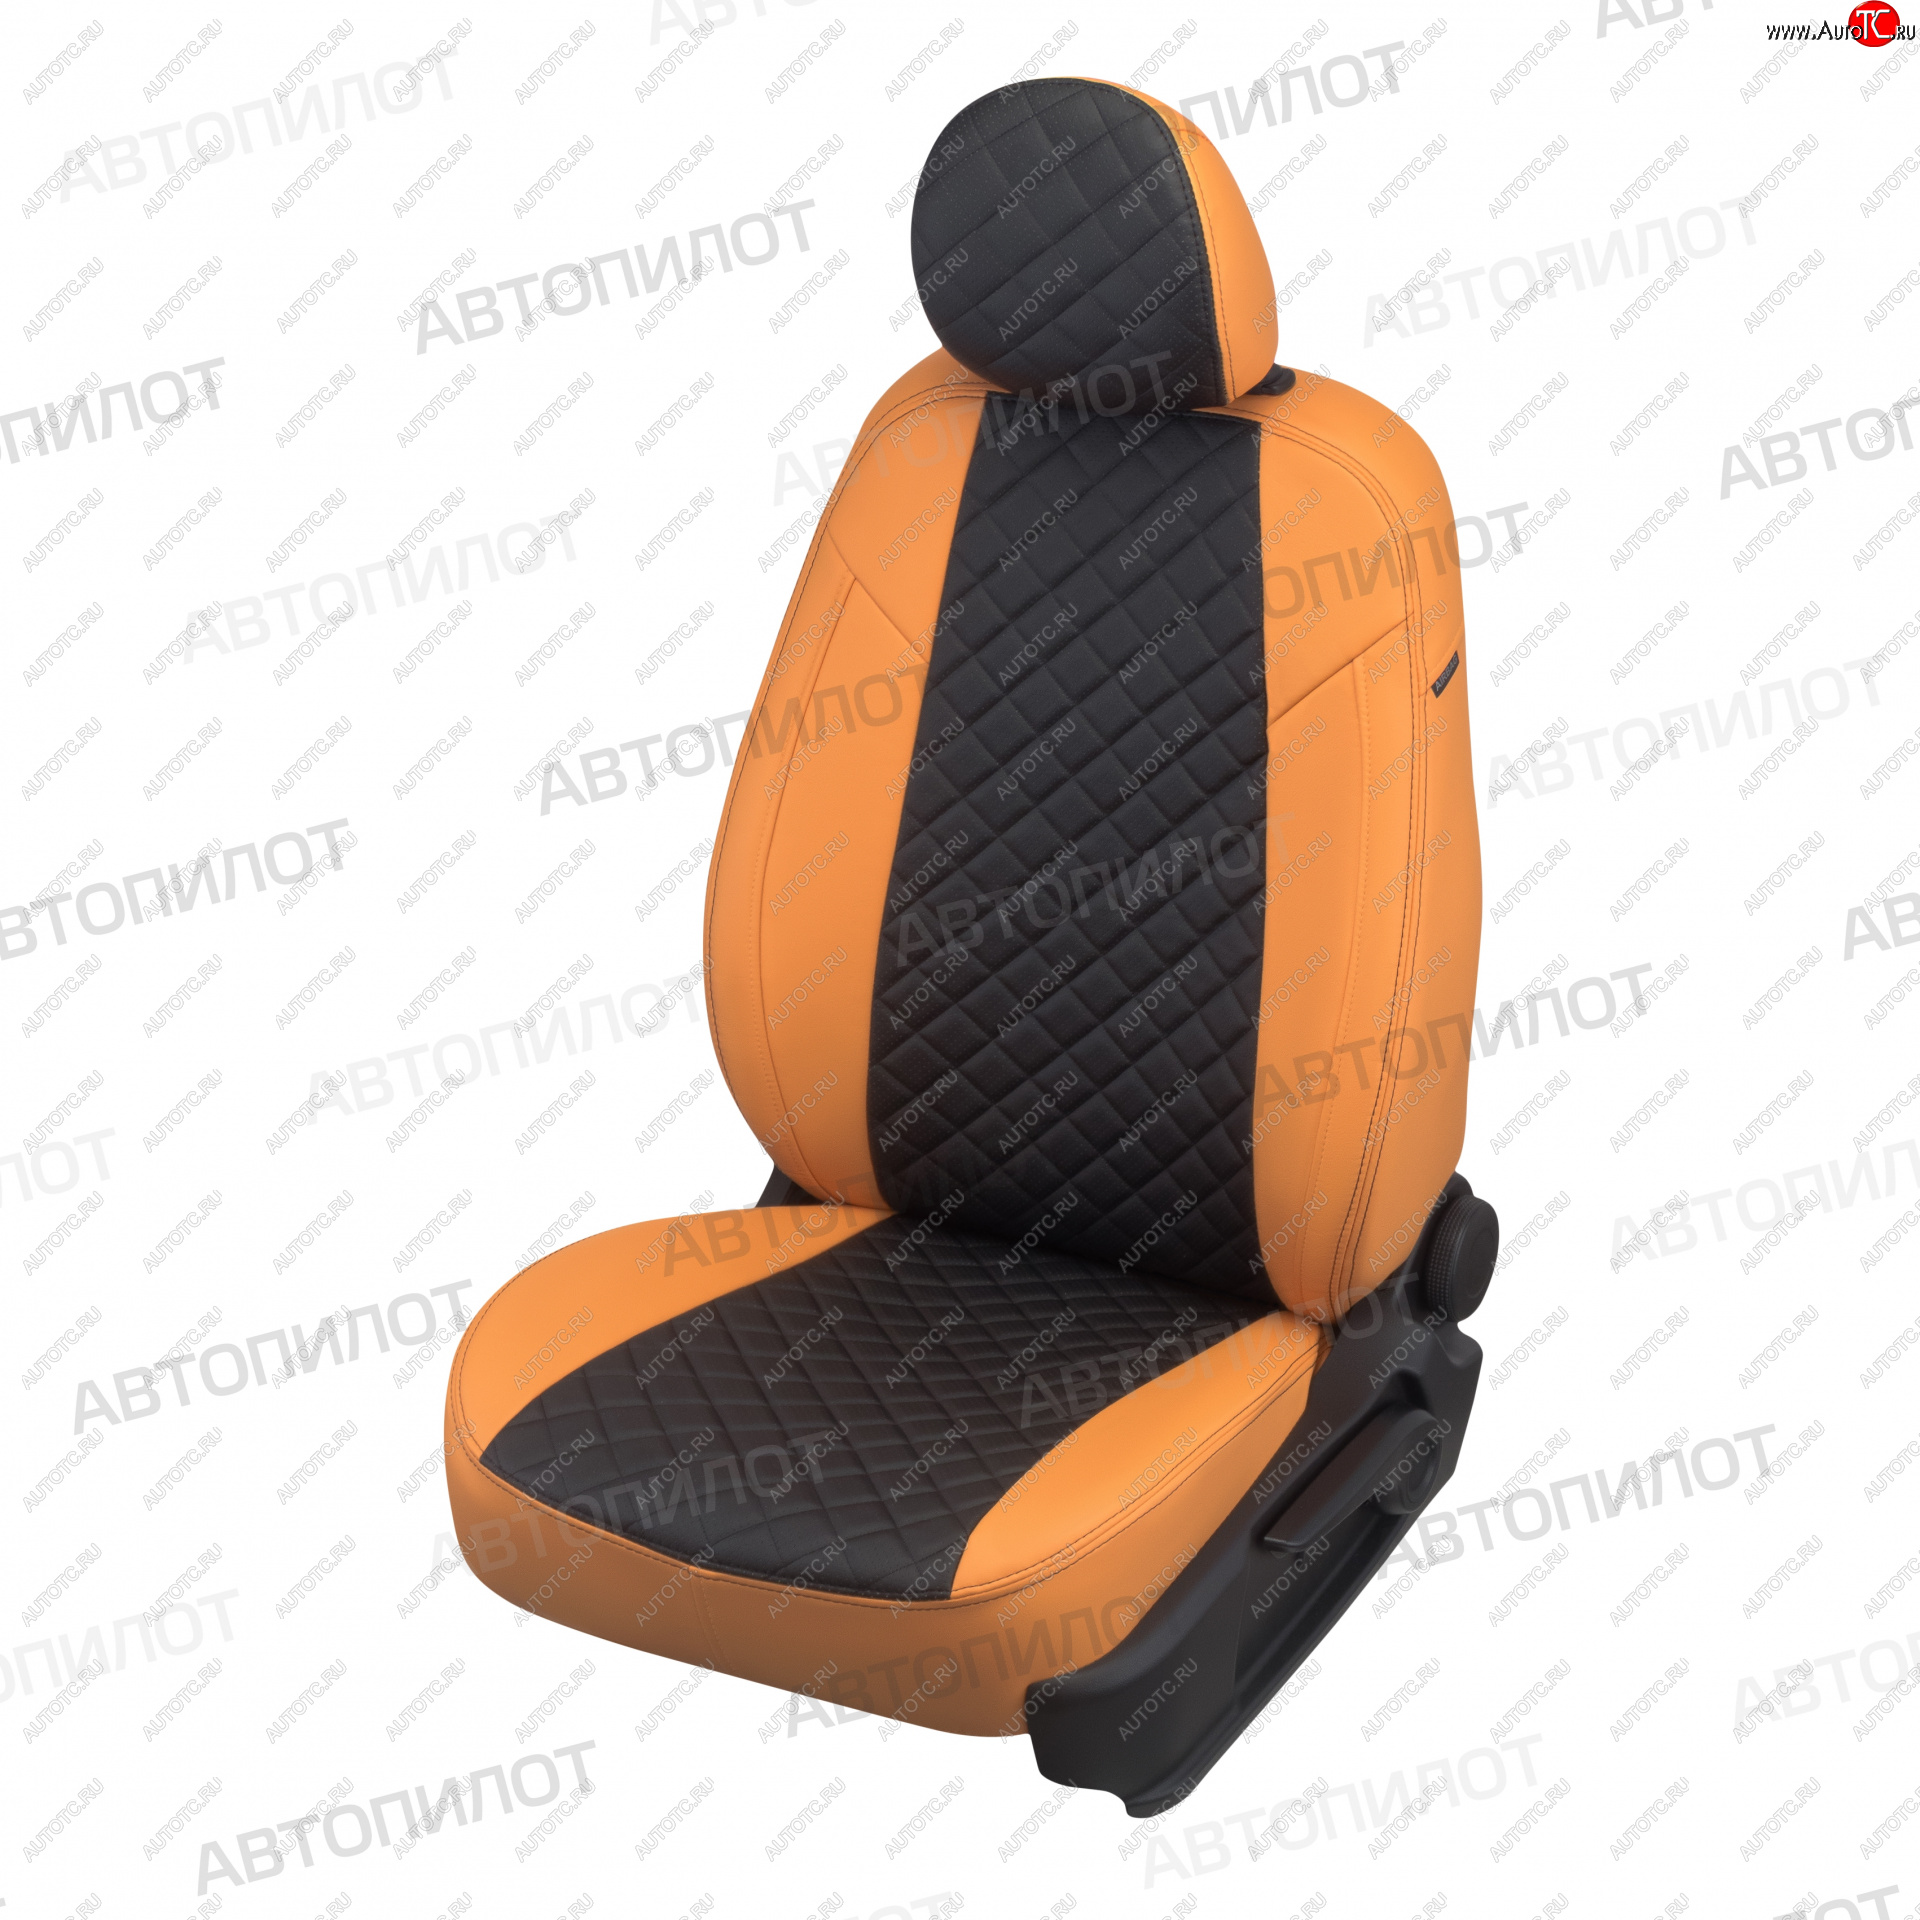 13 999 р. Чехлы сидений (экокожа) Автопилот Ромб  Honda CR-V  RD4,RD5,RD6,RD7,RD9  (2001-2006) (оранж/черный)